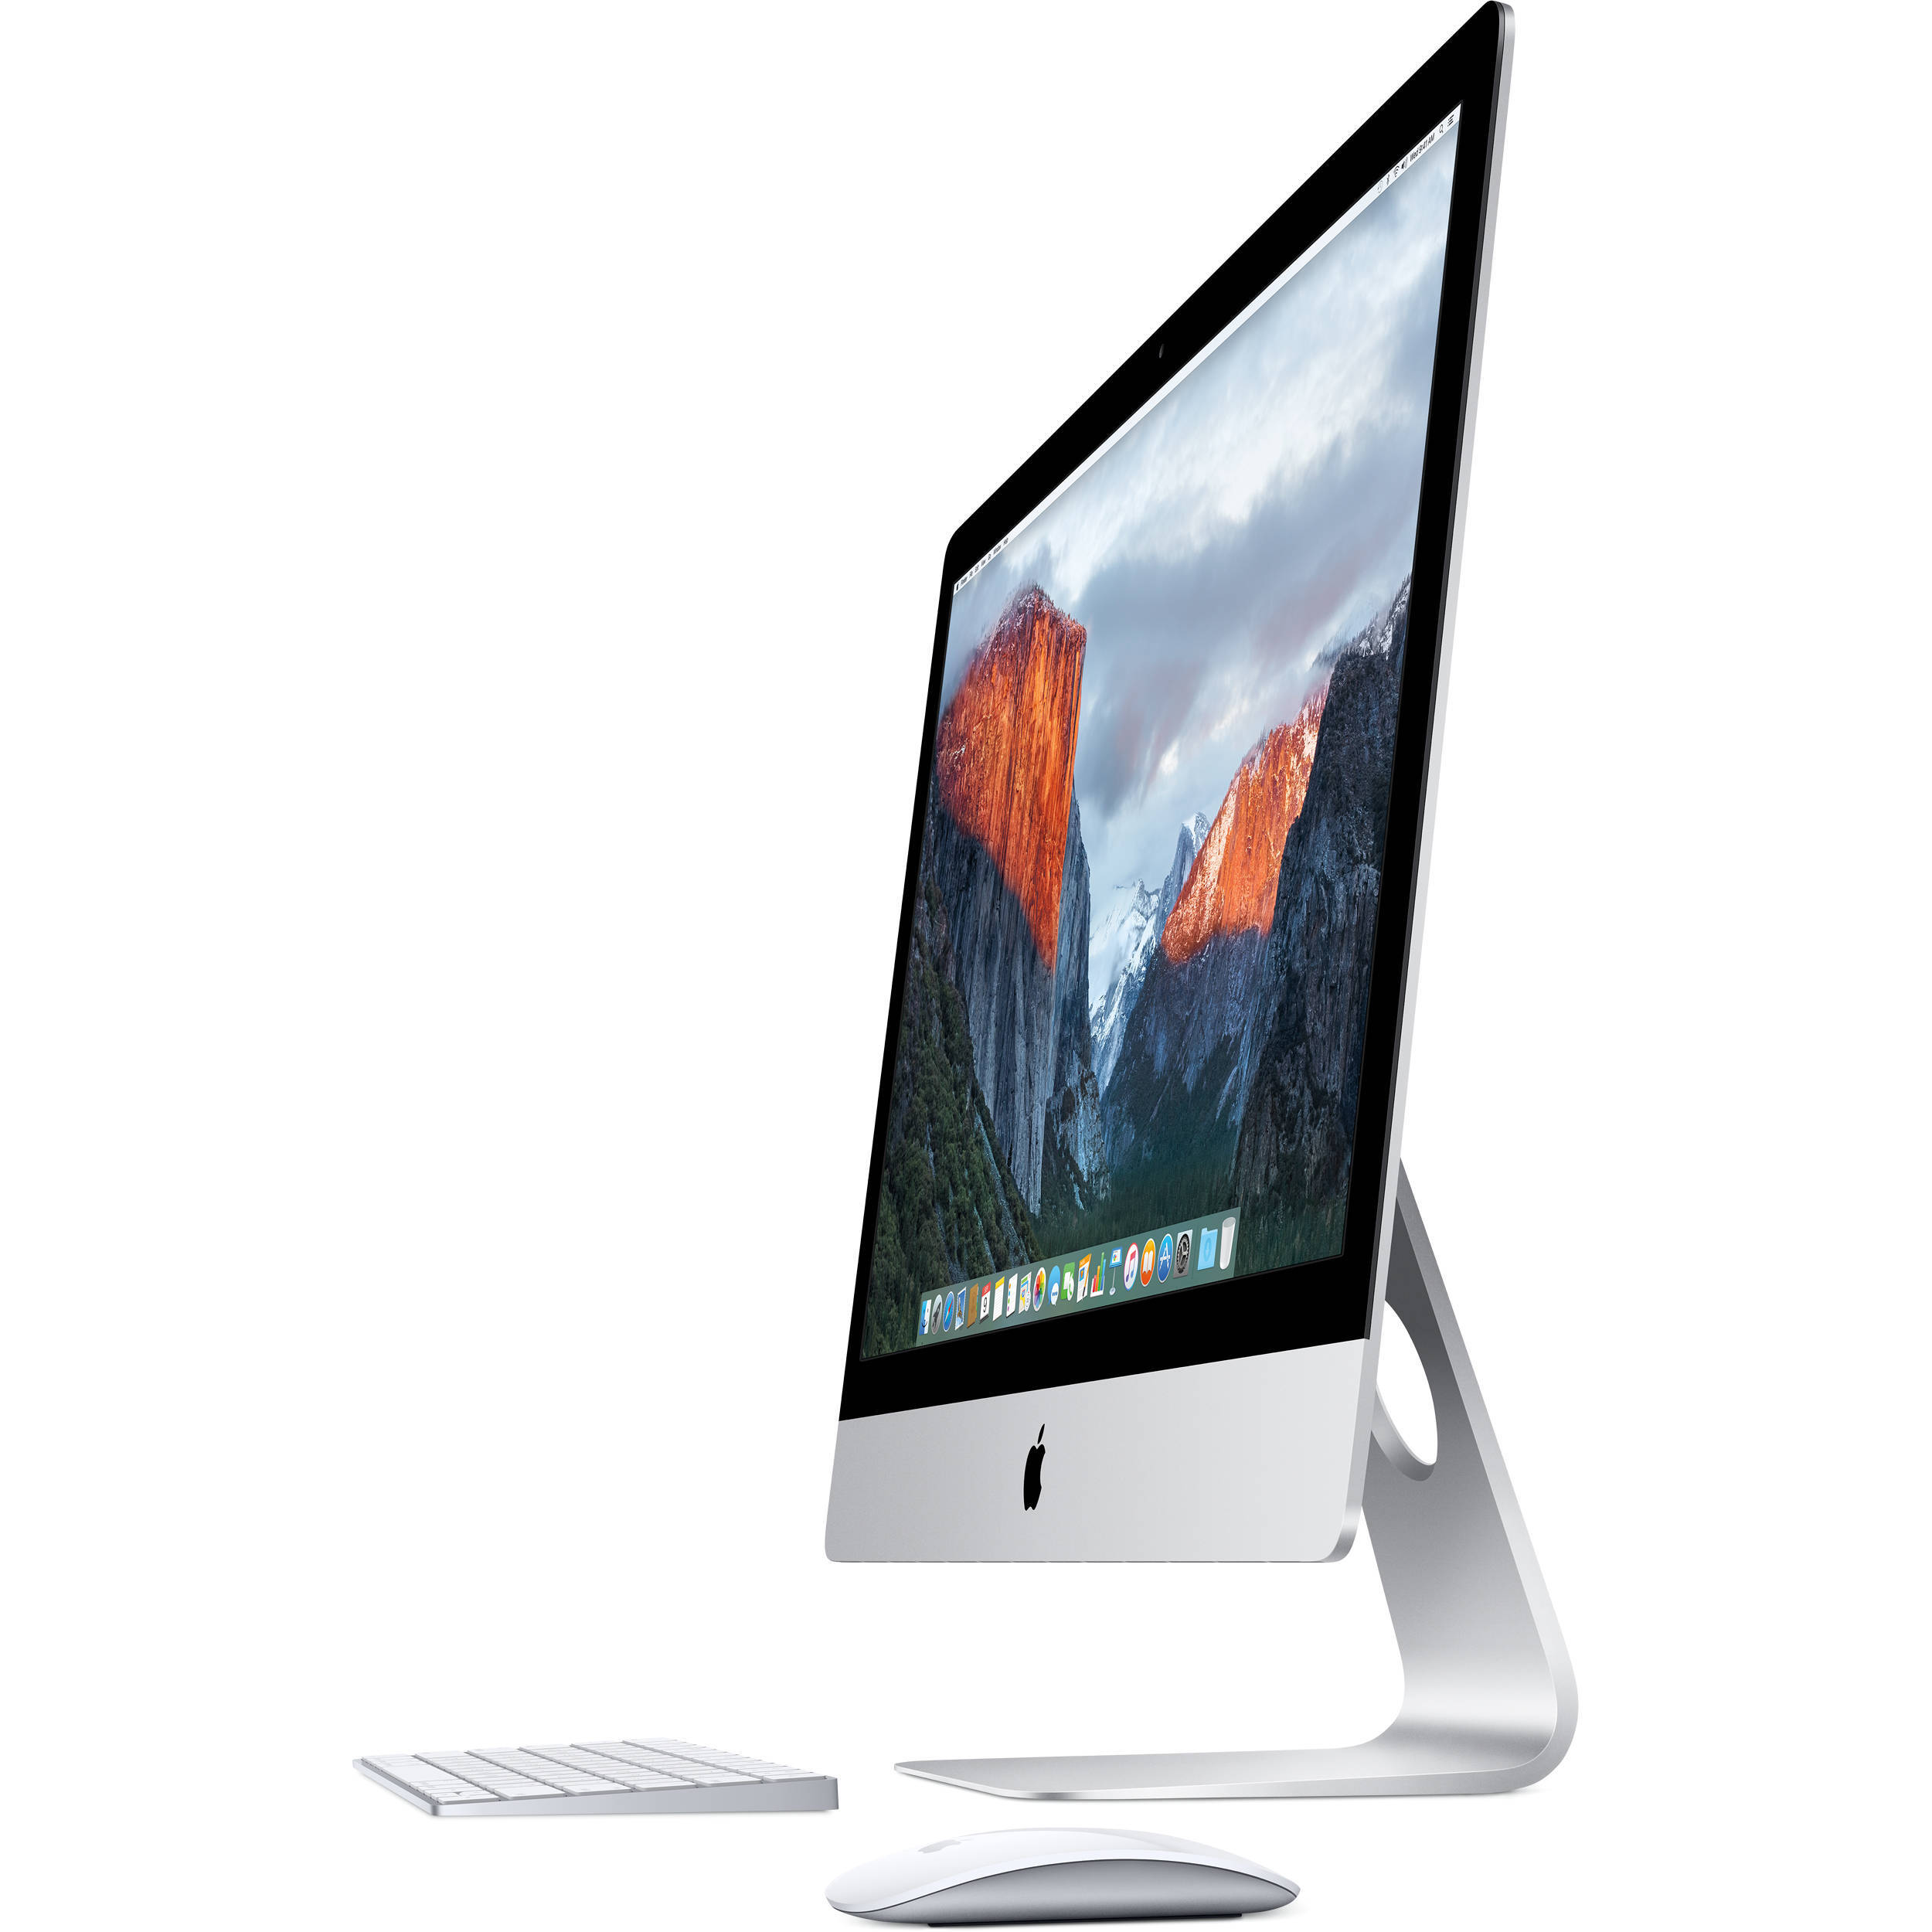 Máy tính để bàn Apple iMac MK462 - Intel Core i5, 8GB RAM, HDD 1TB, AMD Radeon R9 M380 2GB GDDR5, 27 inch